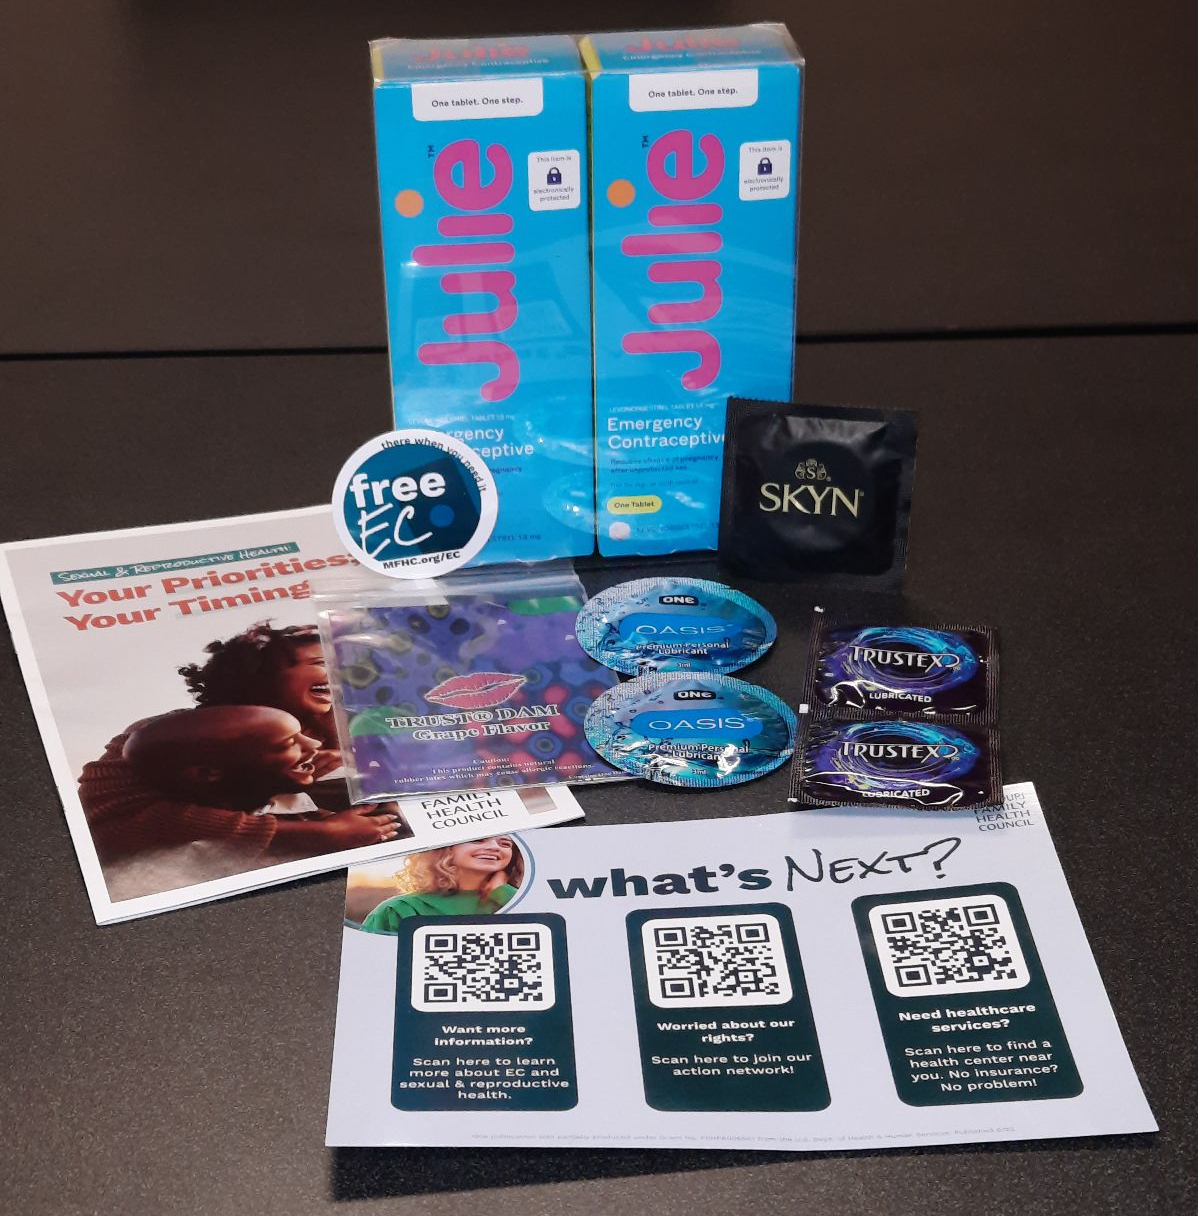 Free EC Emergency Contraceptive Kits